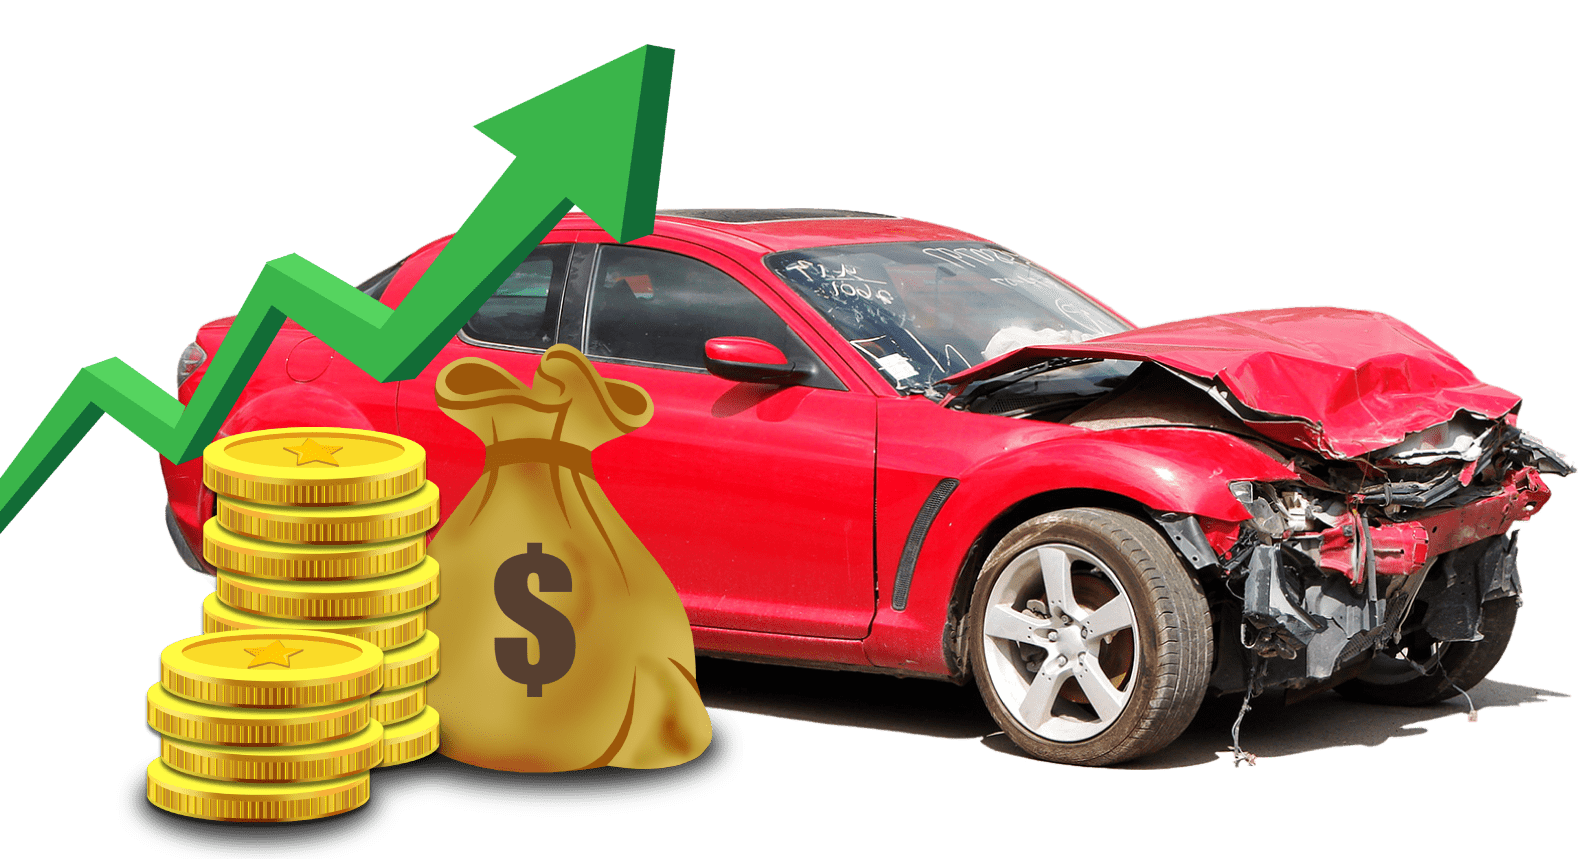  Cash for scrap cars Meldale 